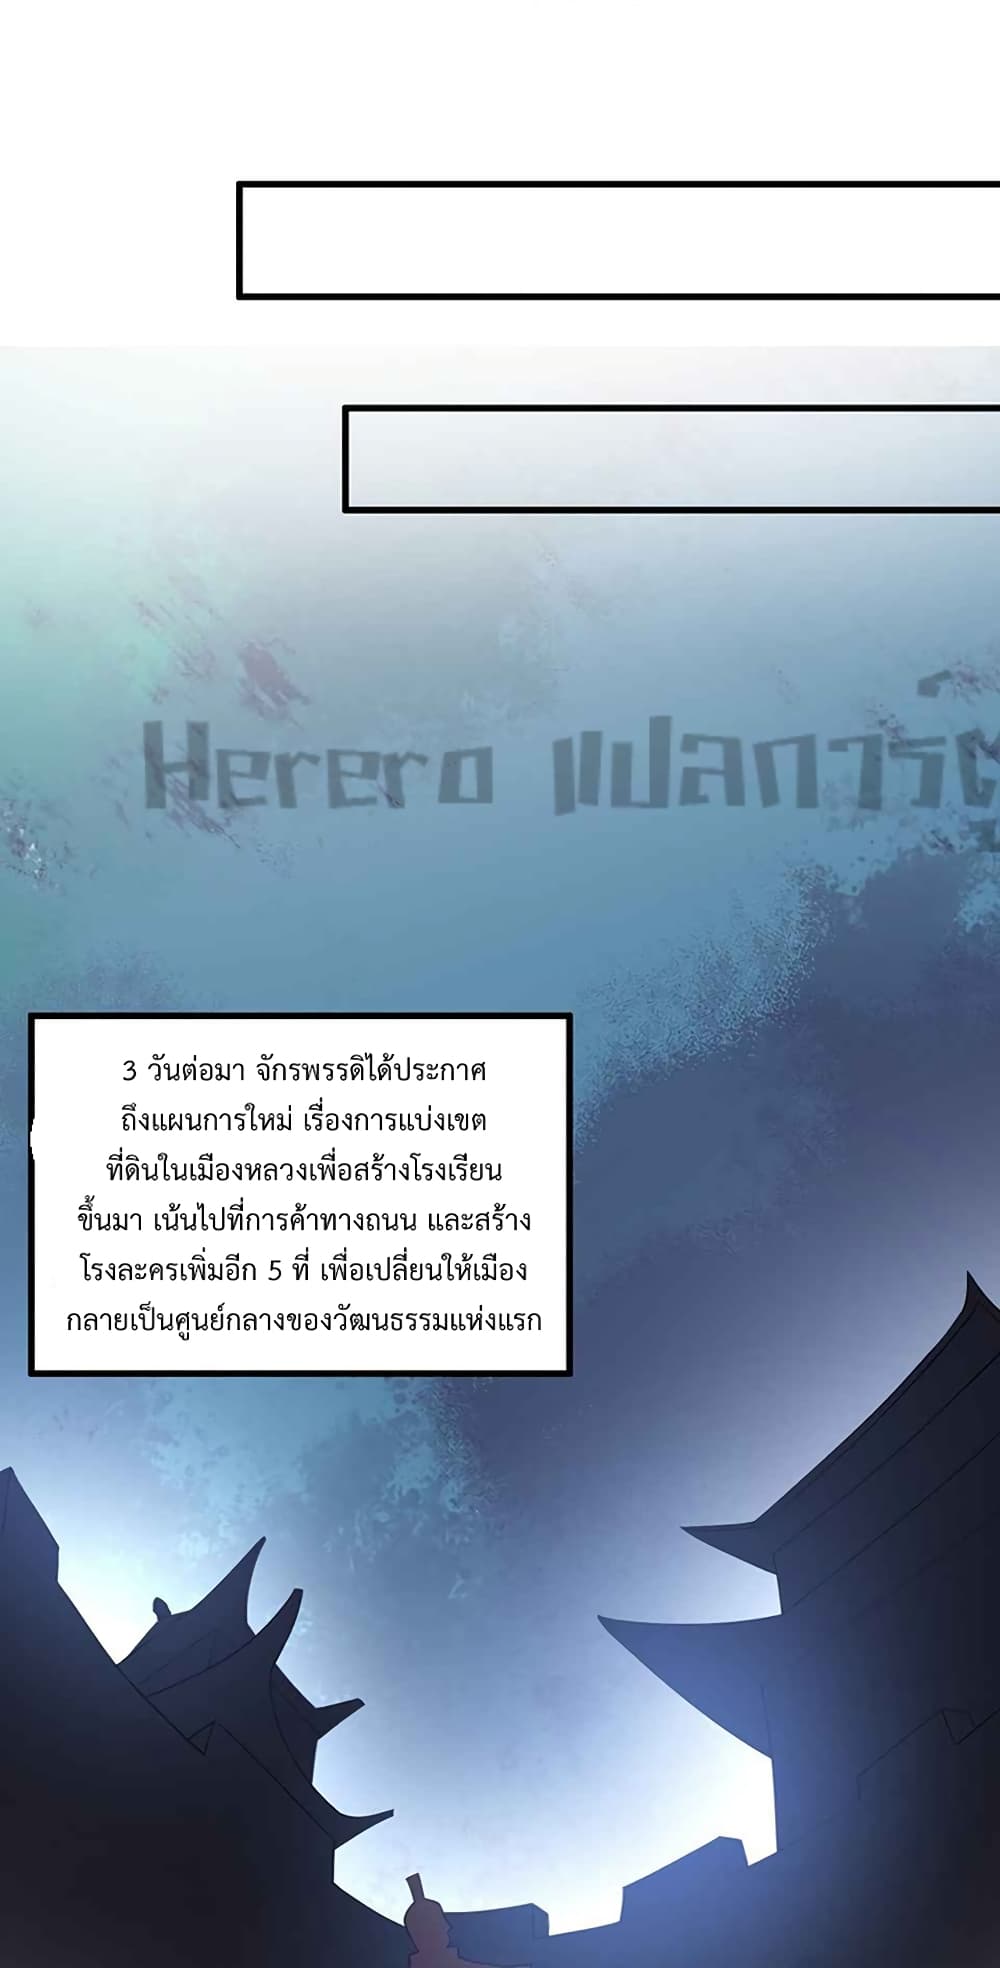 Super Warrior in Another World ทหารเซียนไปหาเมียที่ต่างโลก ตอนที่ 213 (16)